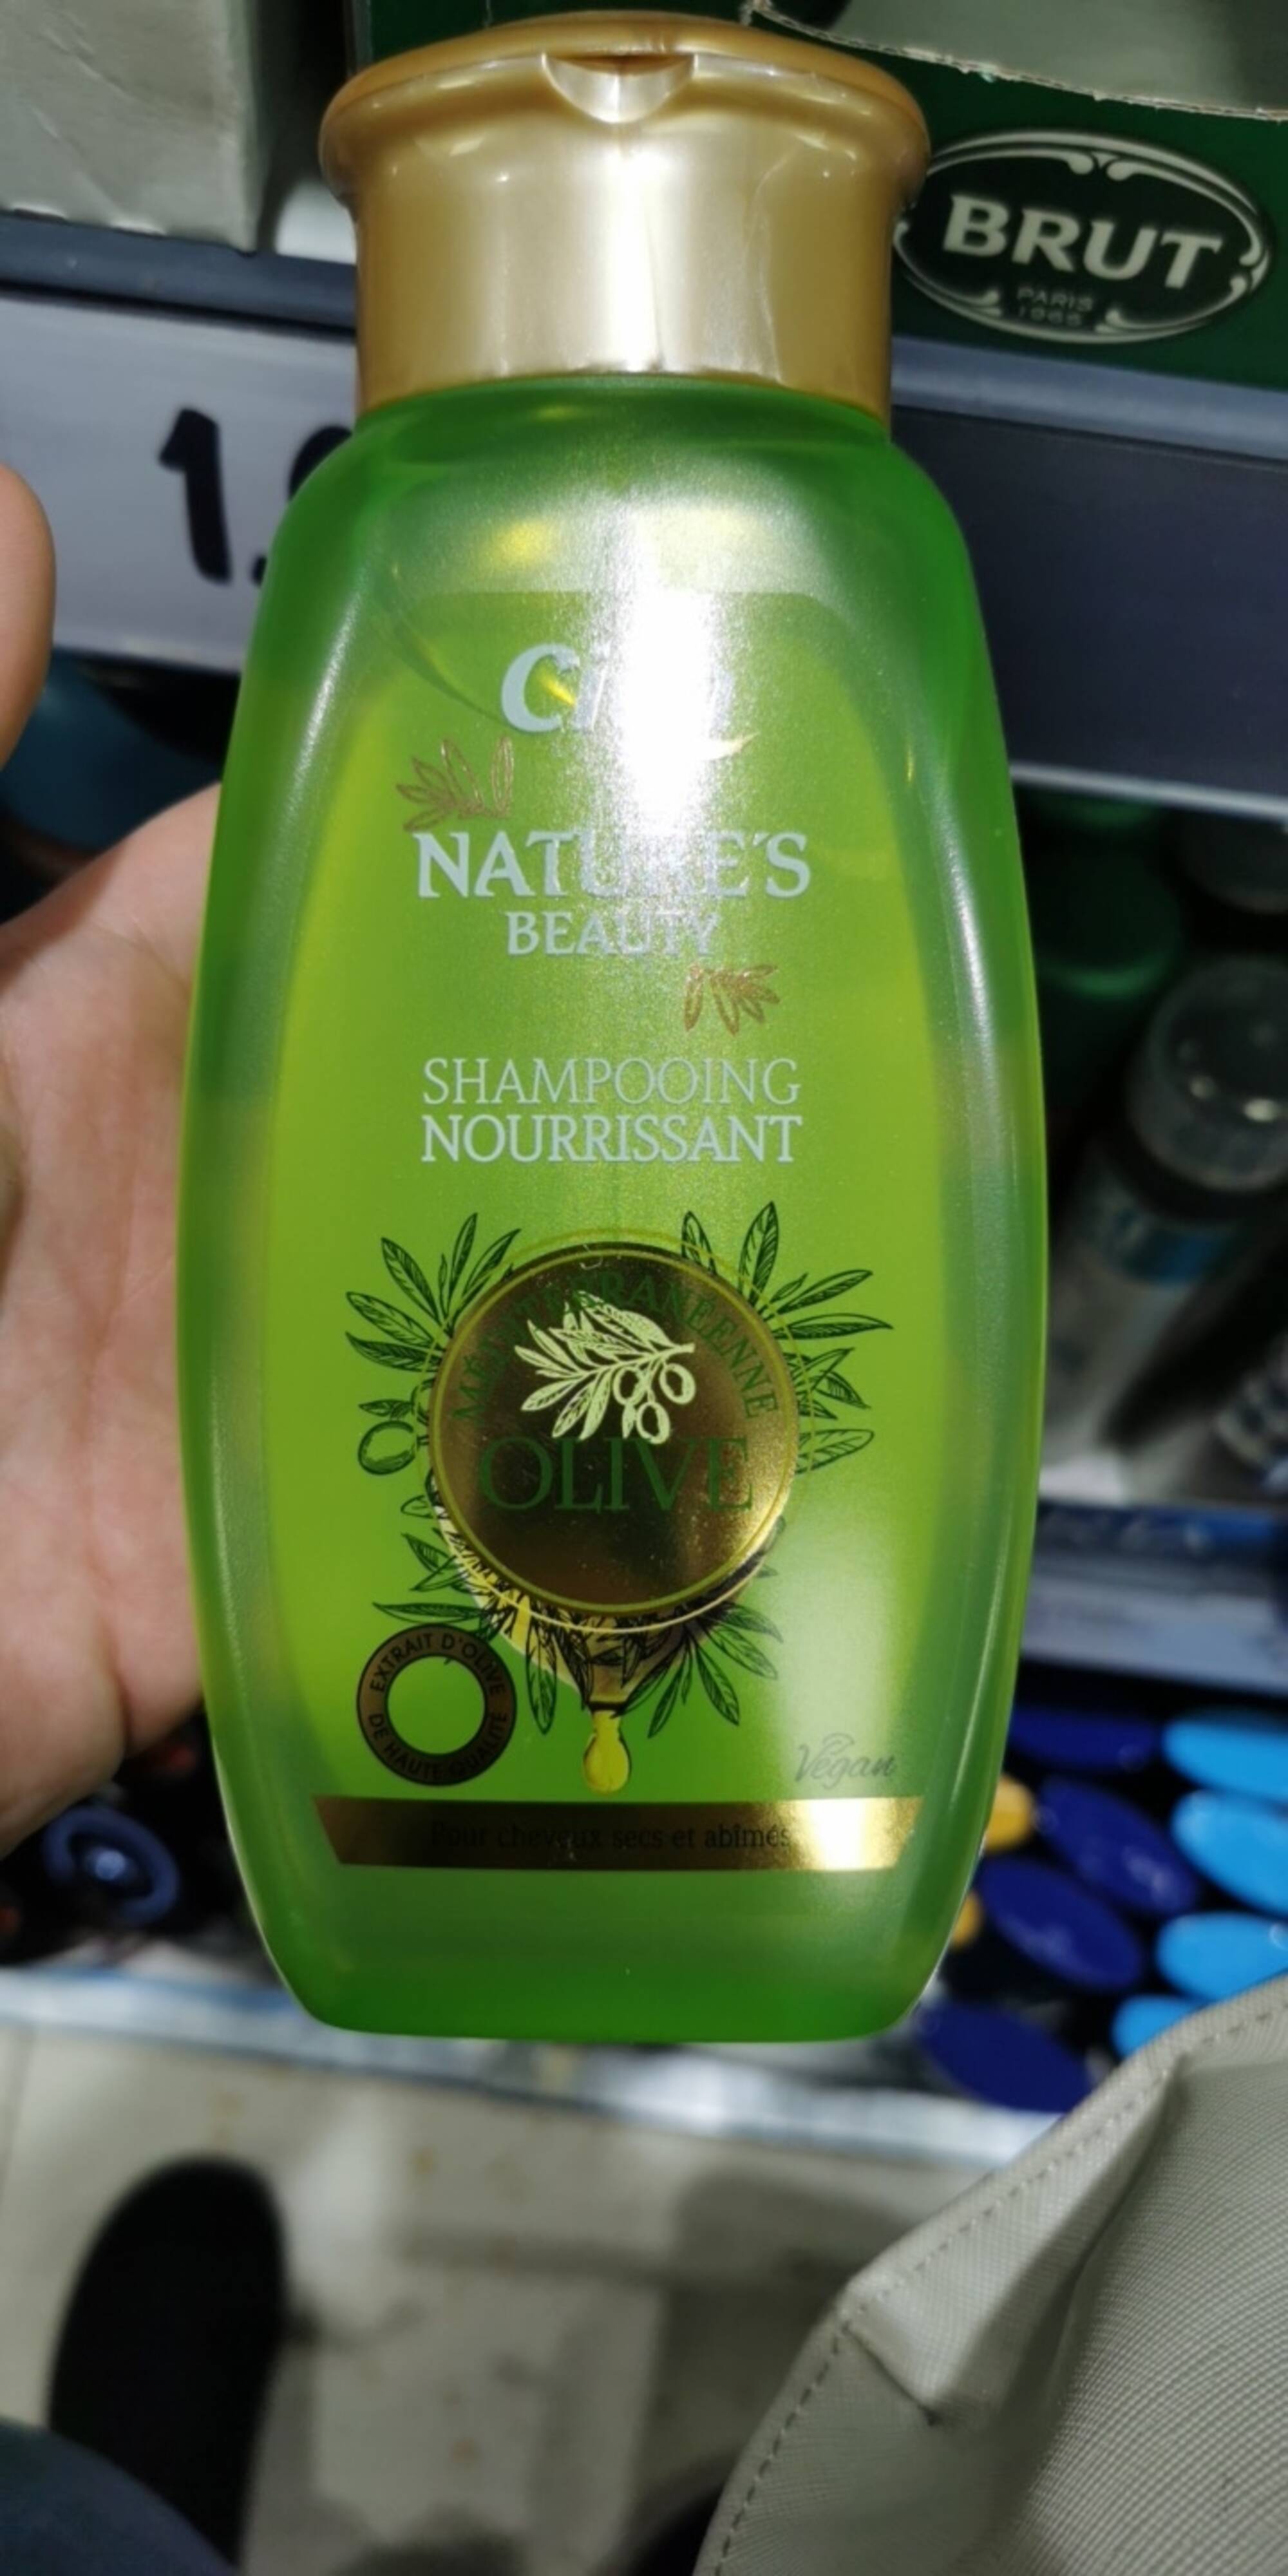 LIDL - Cien nature's Beauty - Shampooing nourrissant olive